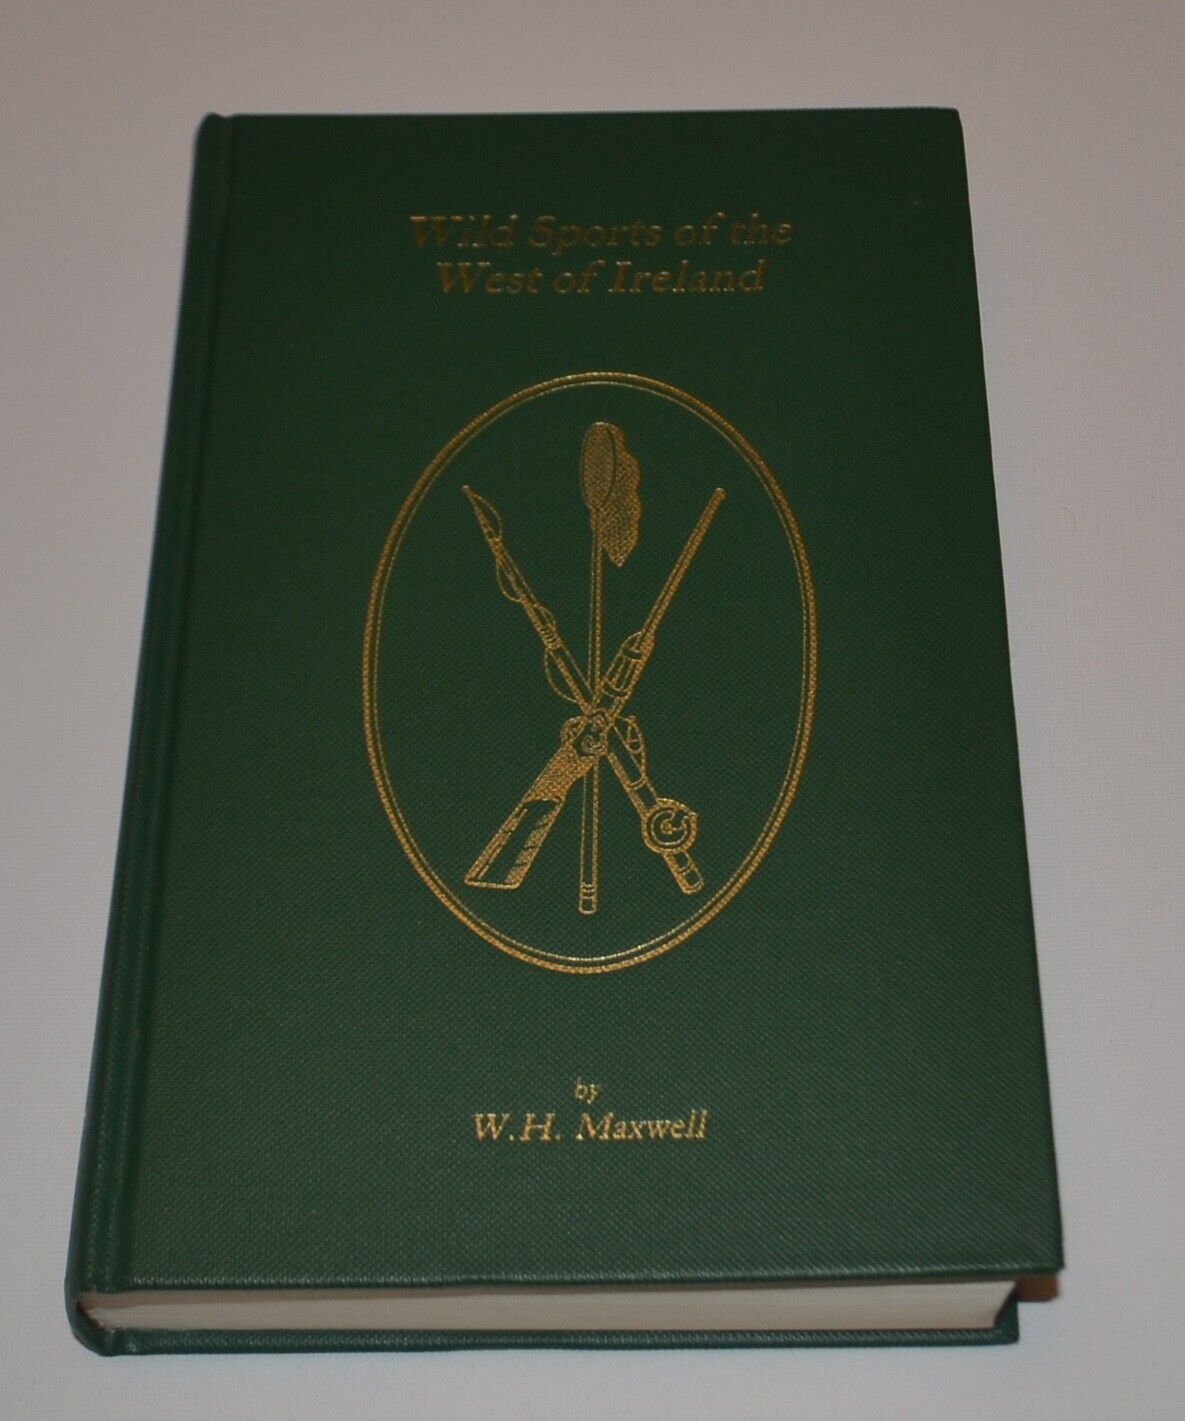 Wild Sports of the West of Ireland Tales, Folk-Lore William Hamilton Maxwell HC